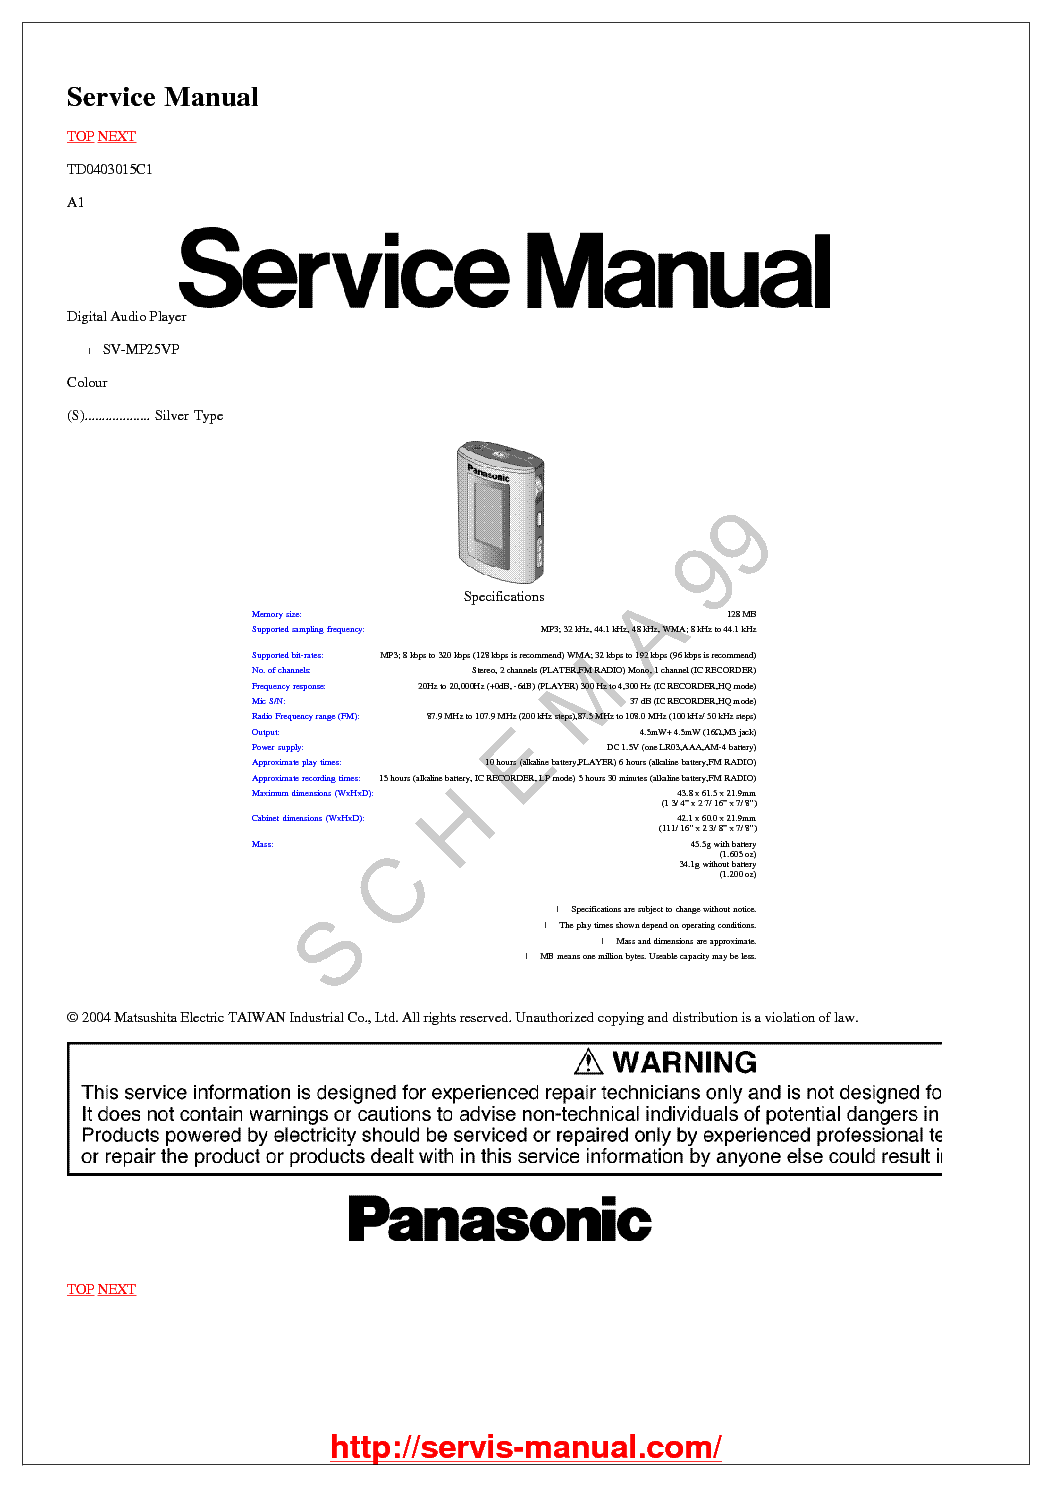 PANASONIC SV-MP-25 service manual (1st page)